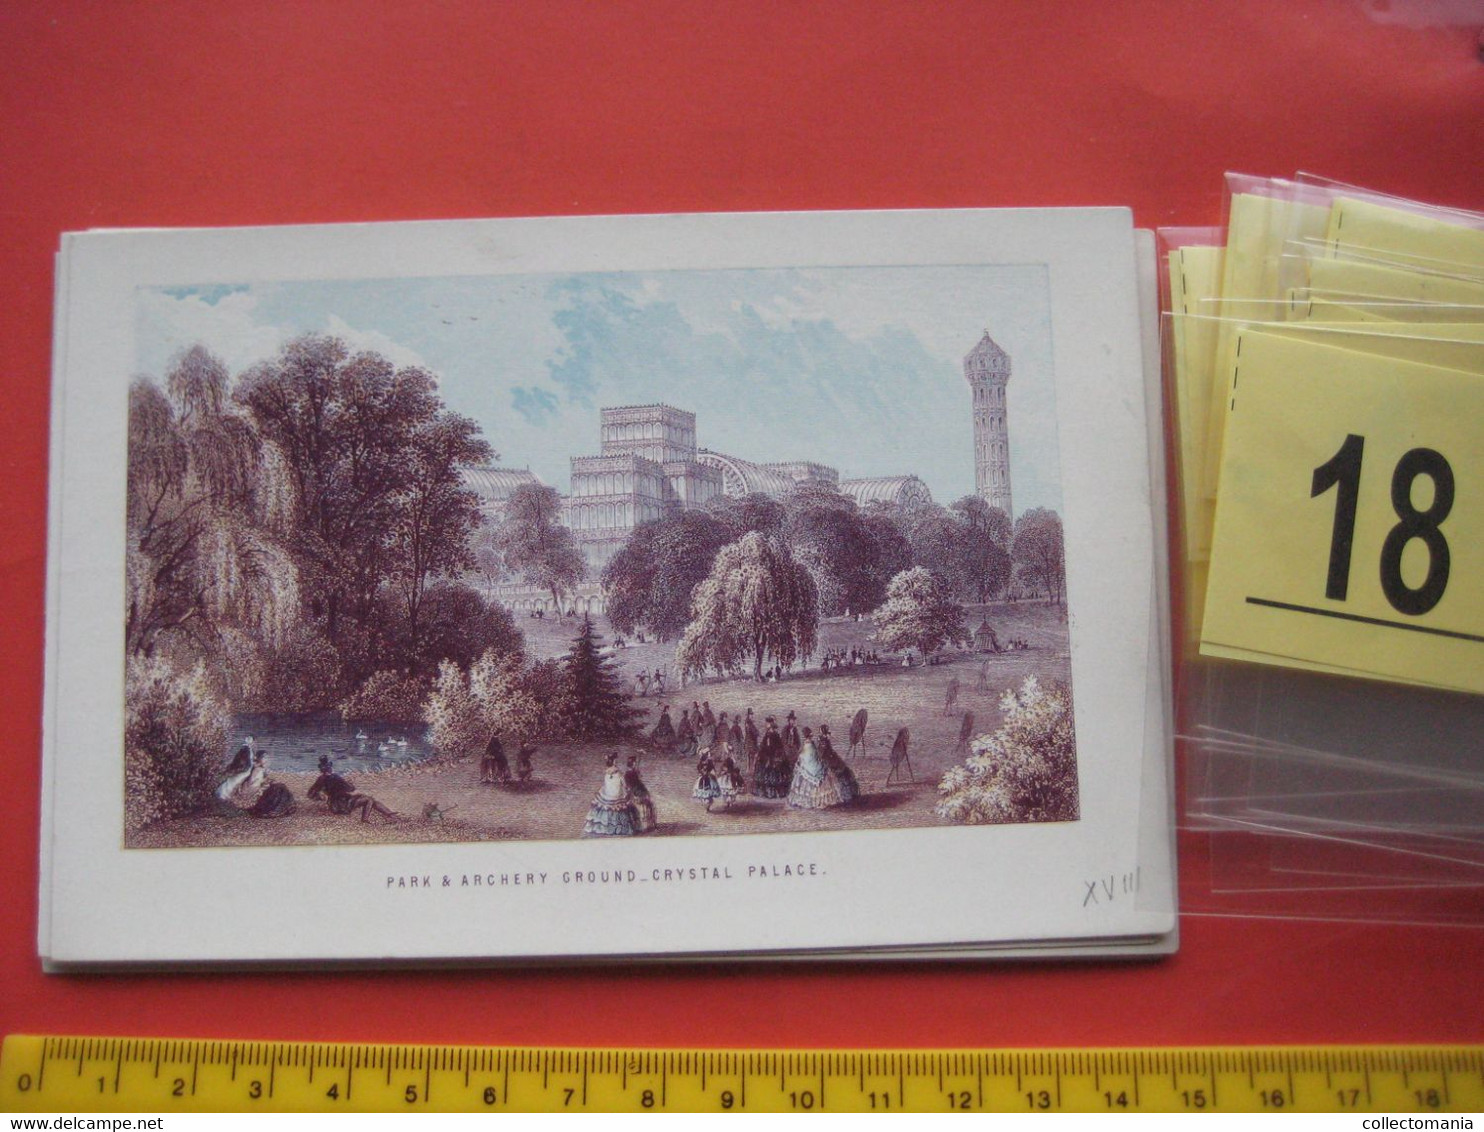 30 cards serie - fine quality litho prints (no postcards).  Het wereldberoemde  Chrystal Palace London anno 1867